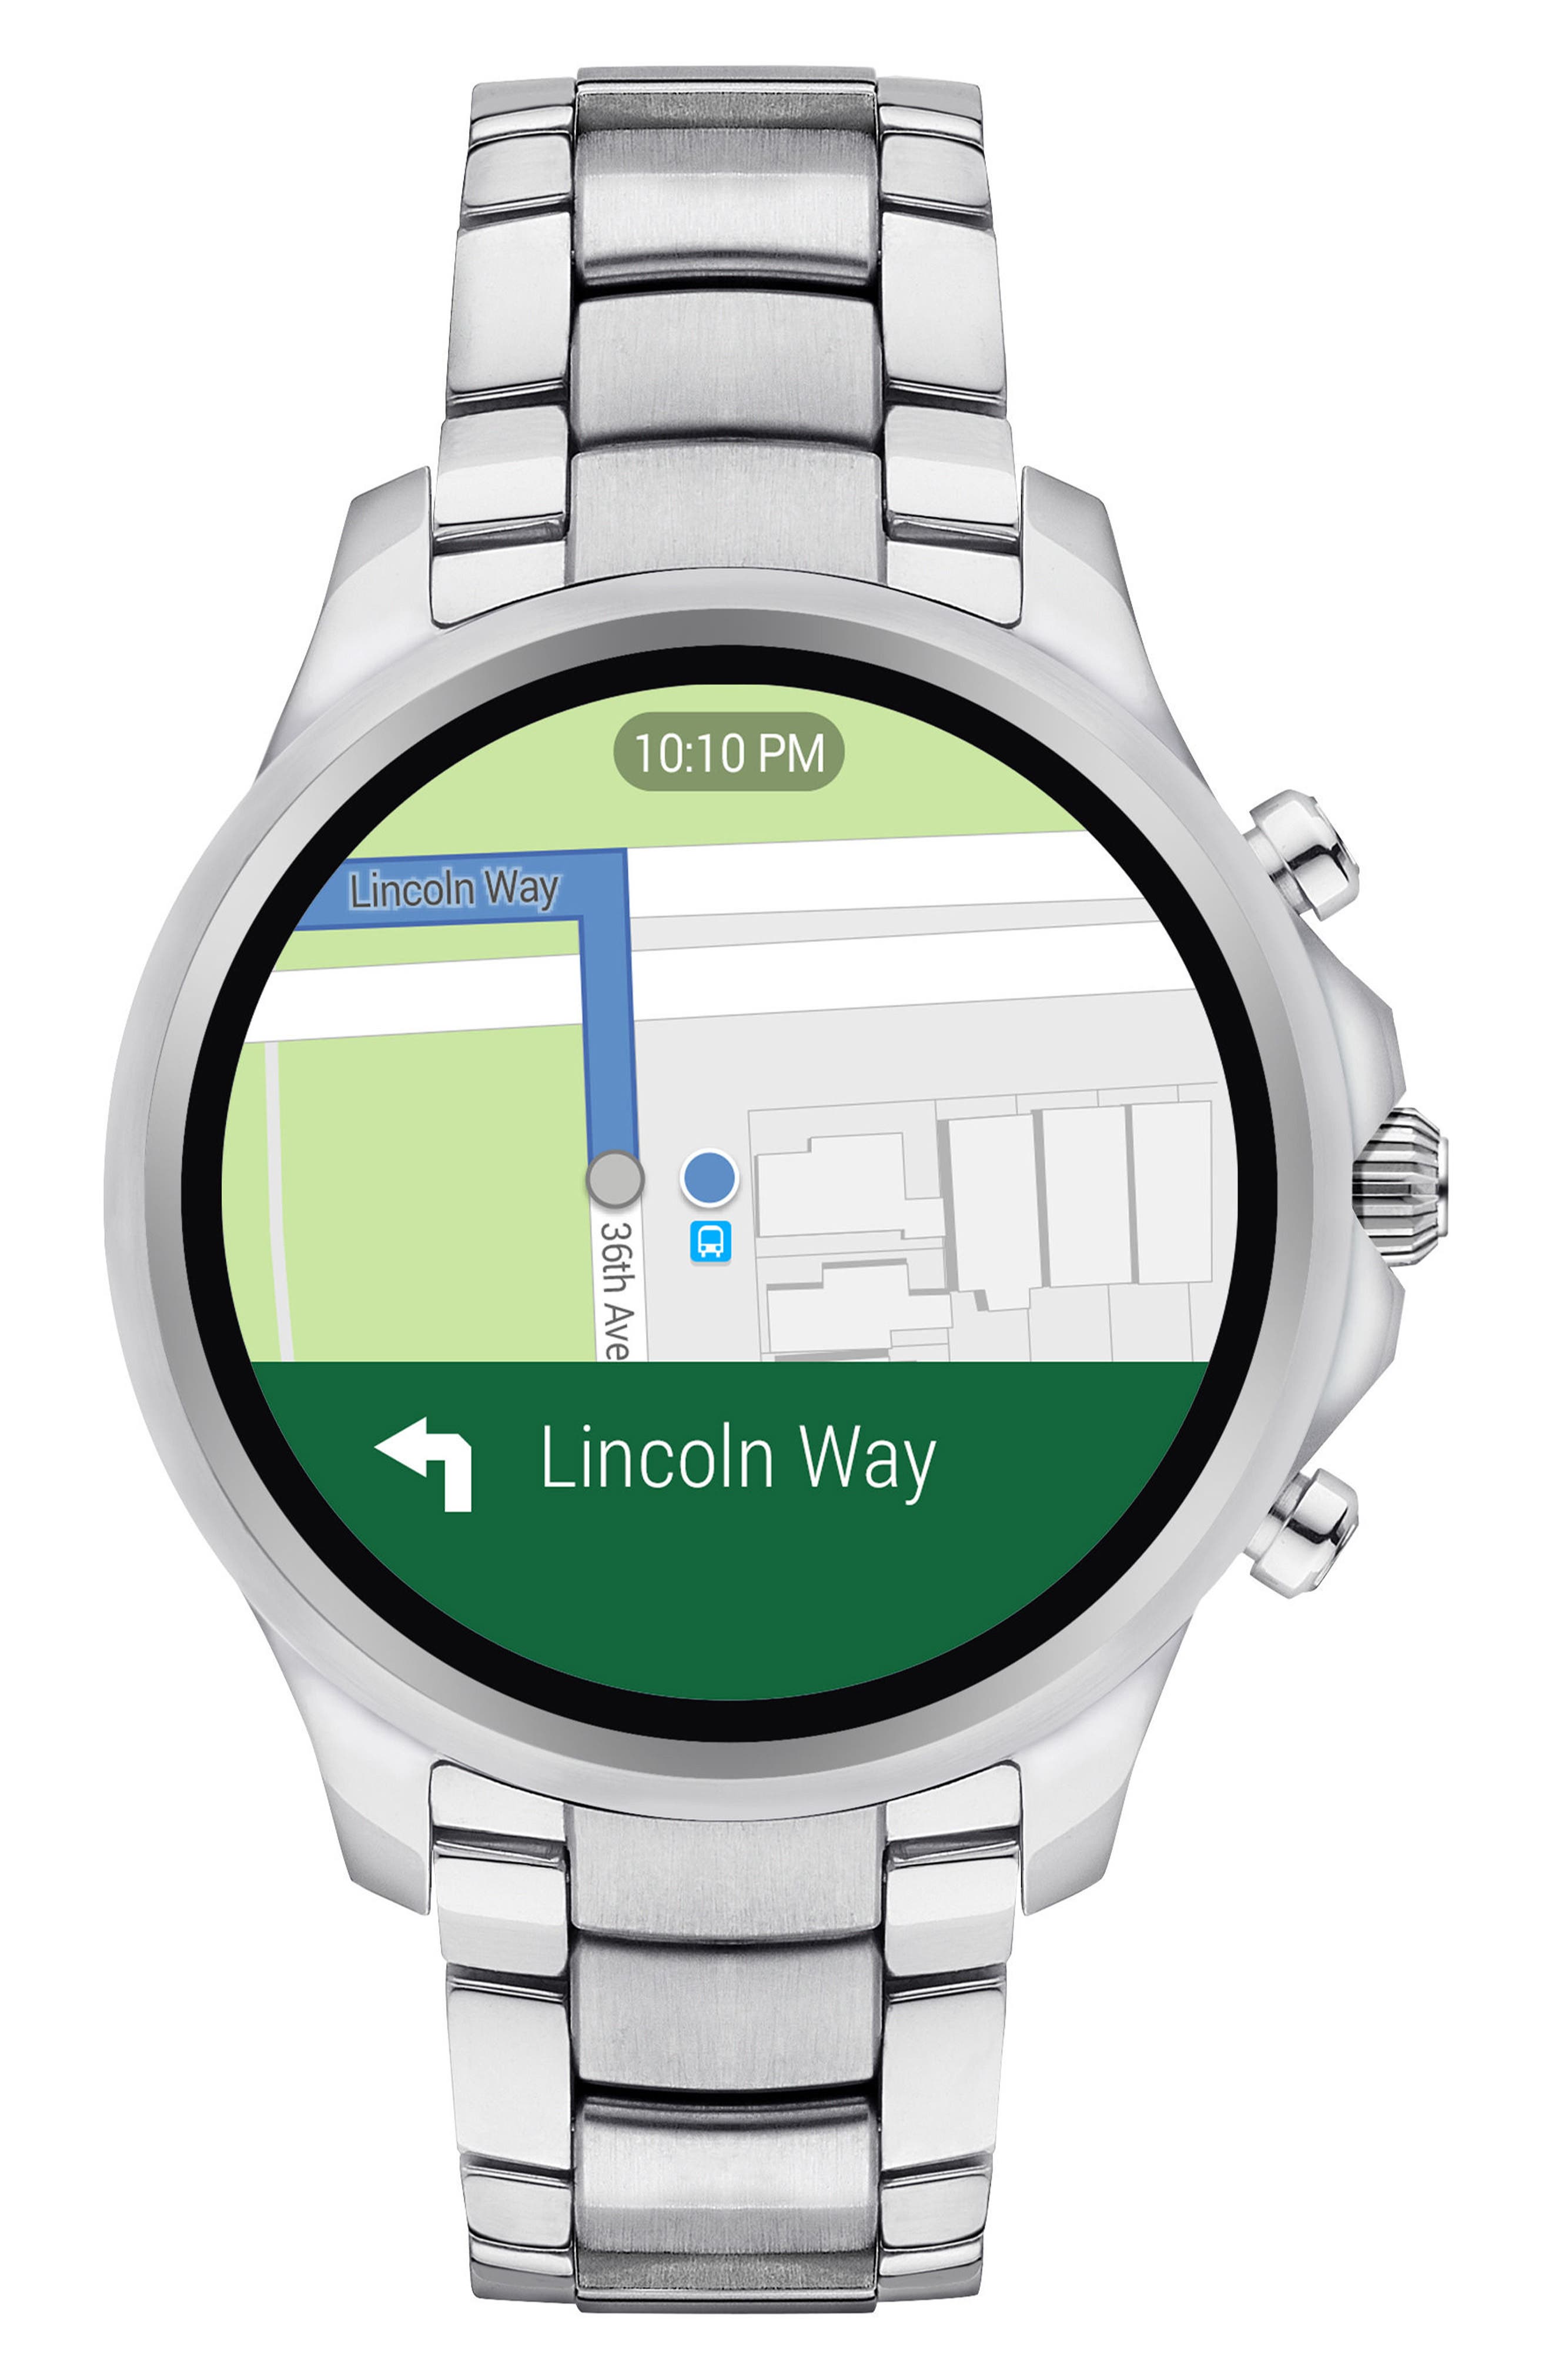 armani smartwatch touchscreen